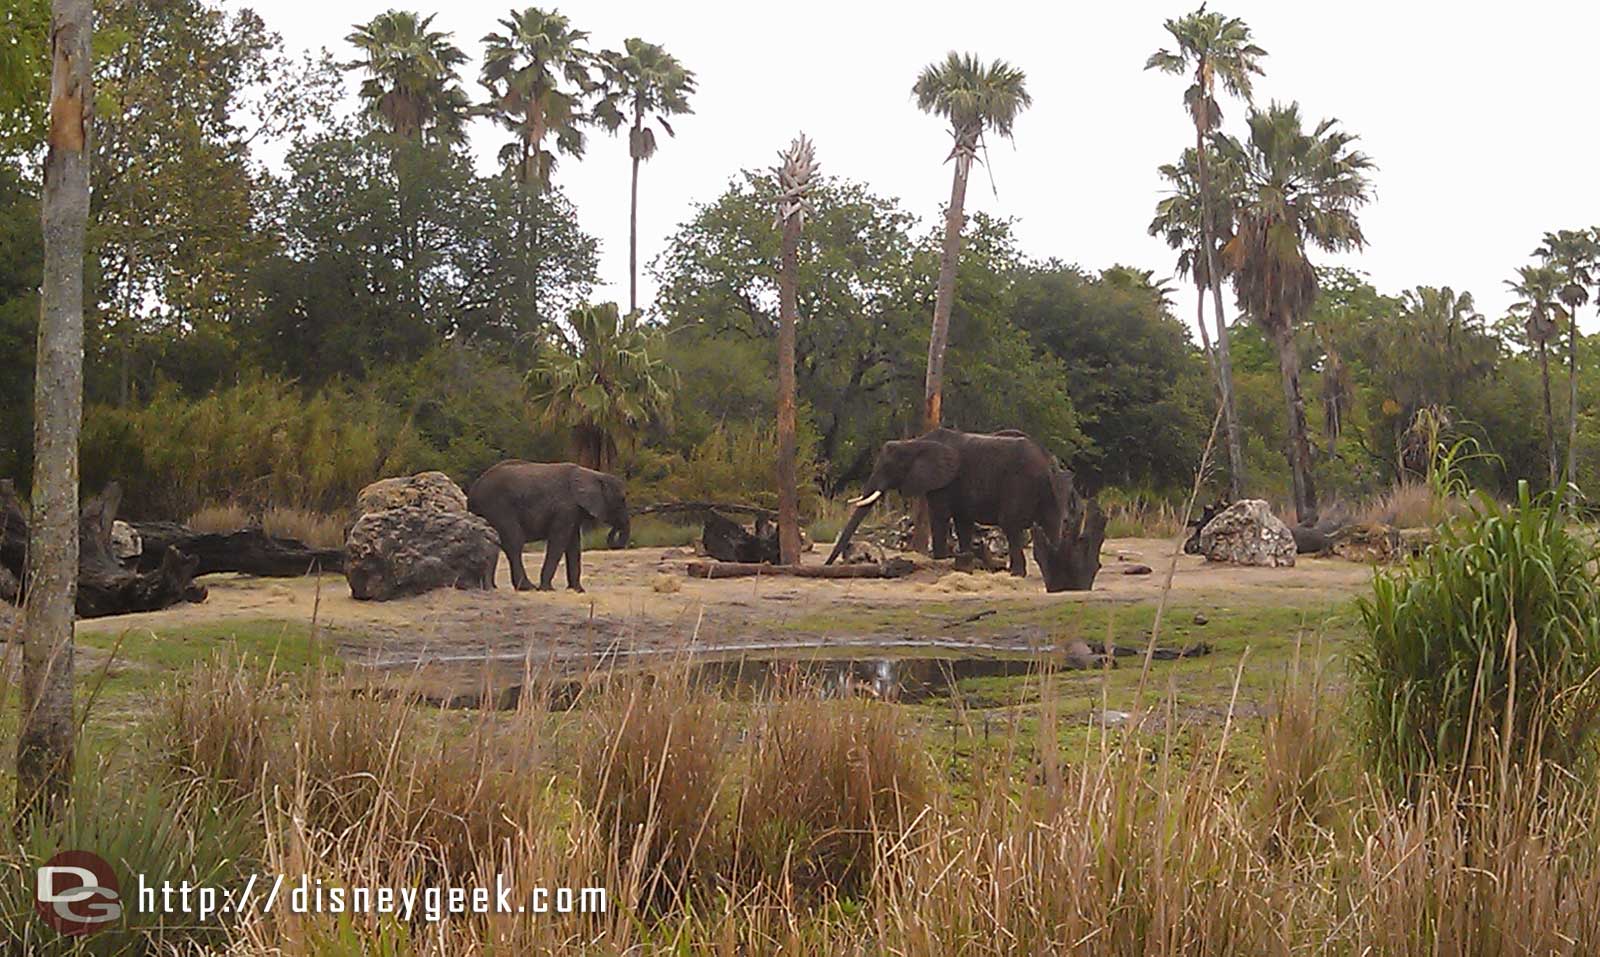 Spotted some elephants DAK15